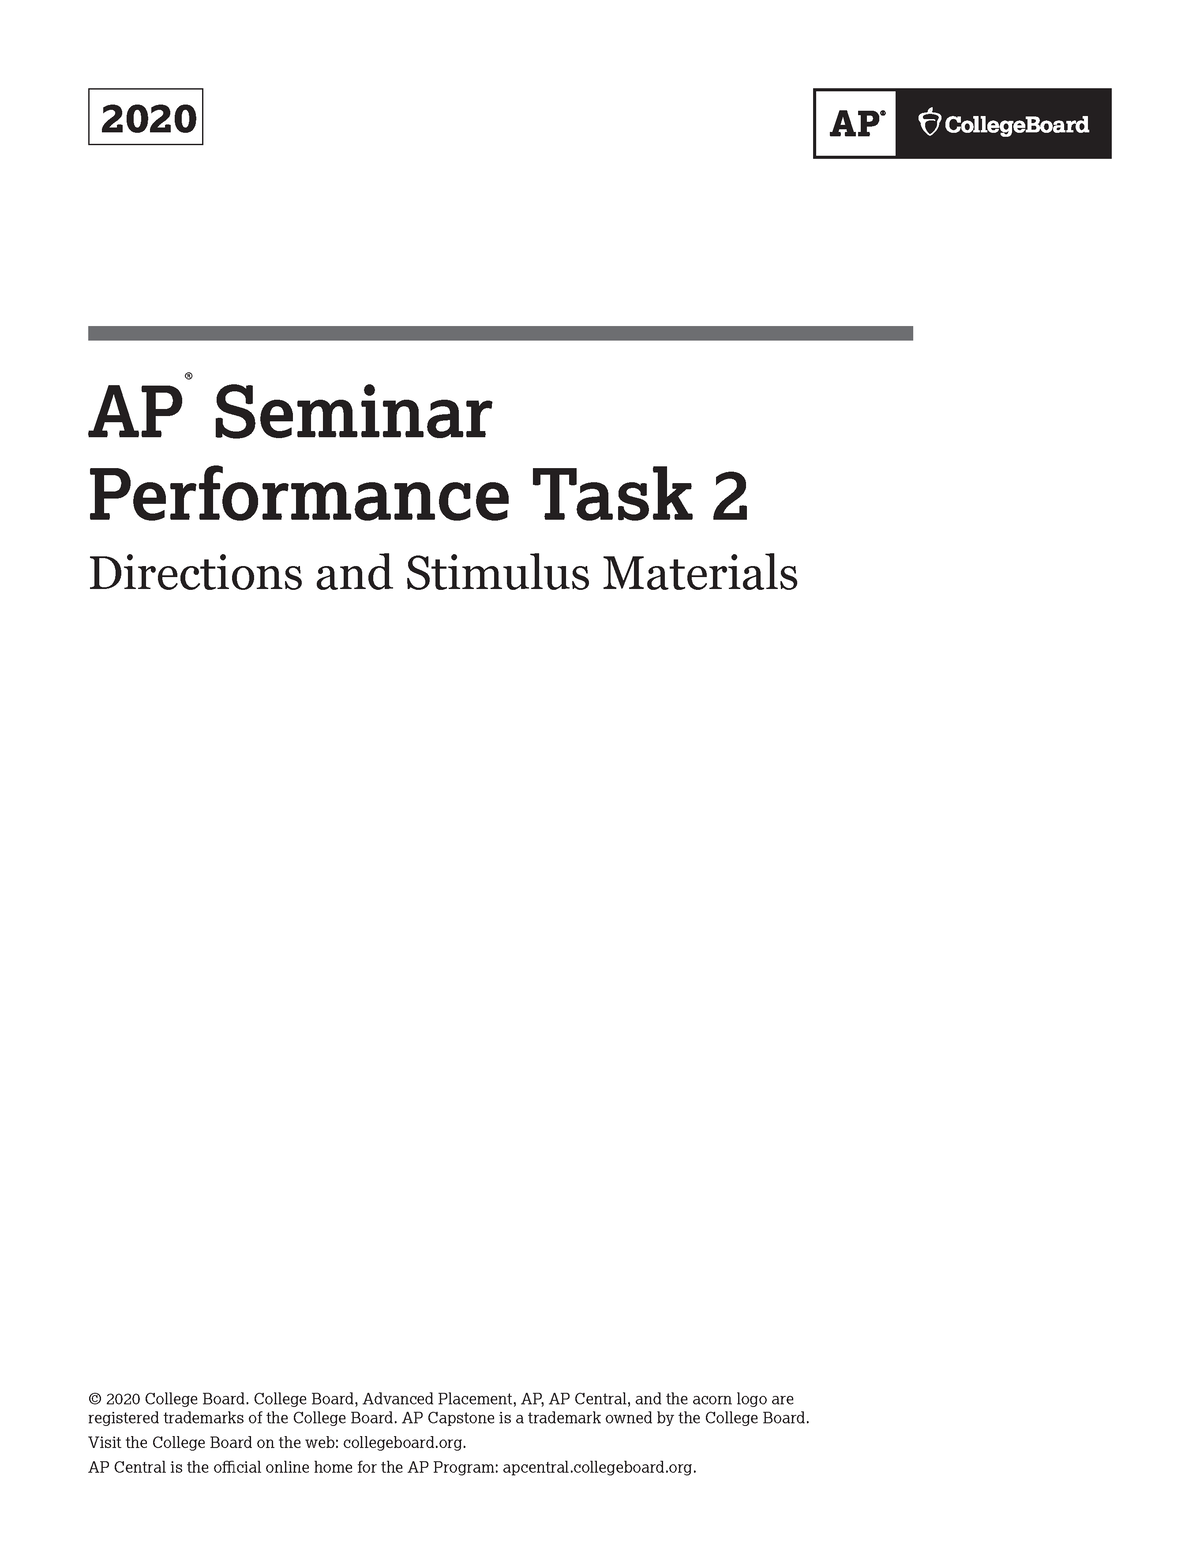 Performance Task 2 2020 ® AP Seminar Performance Task 2 Directions